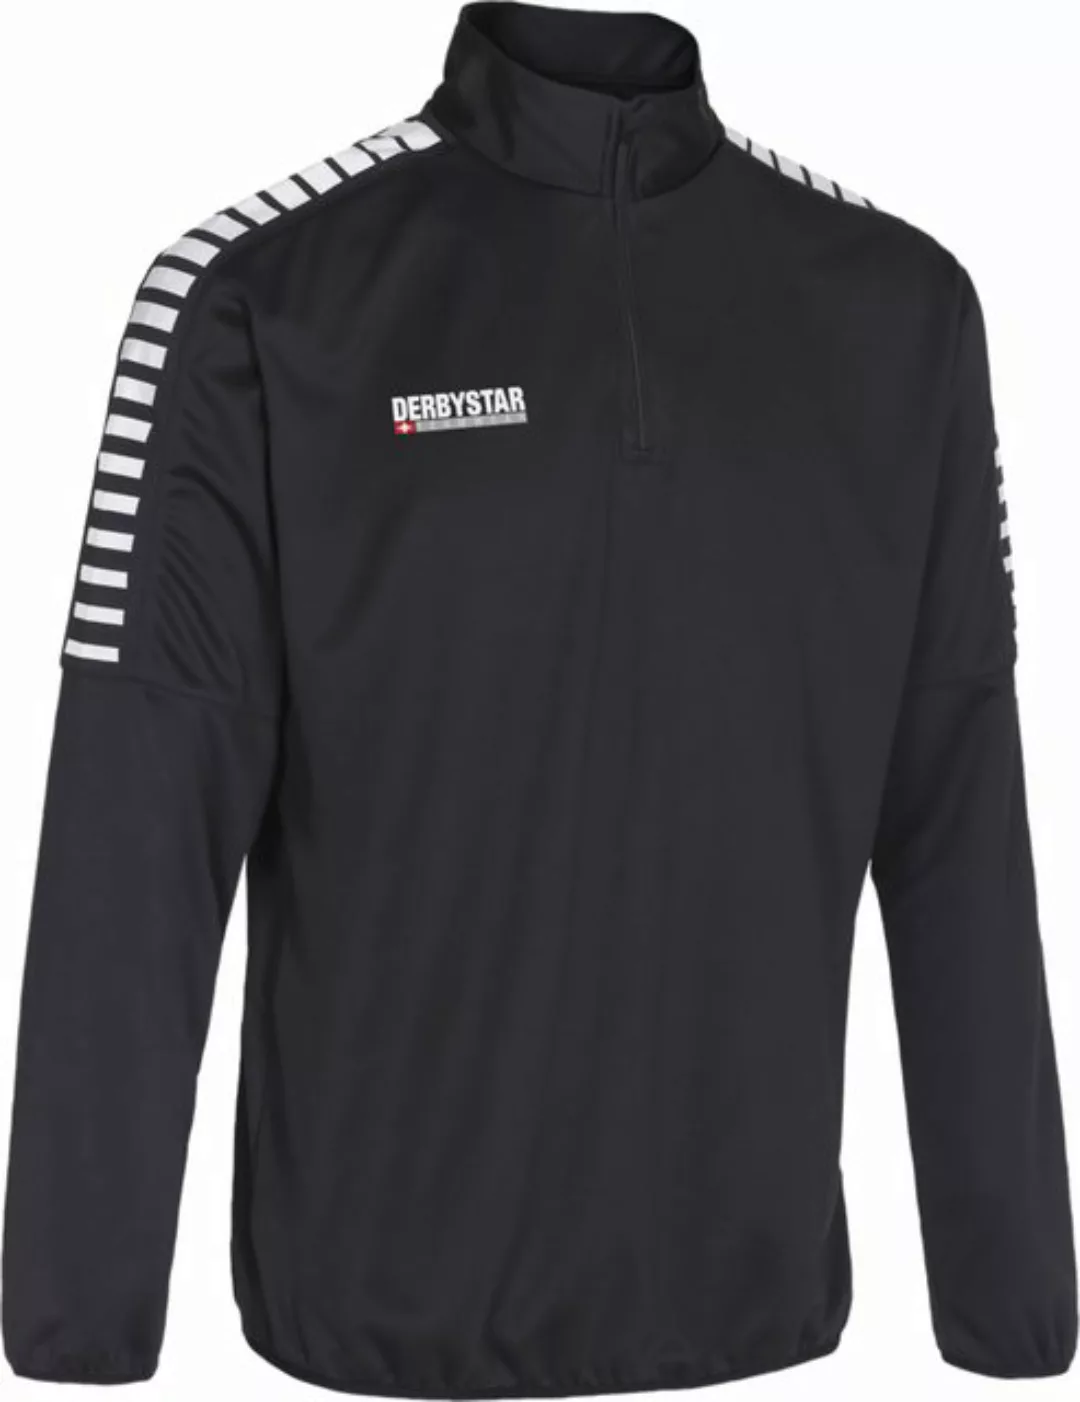 Derbystar Longsweatshirt Hyper Trainingstop schwarz/weiss günstig online kaufen